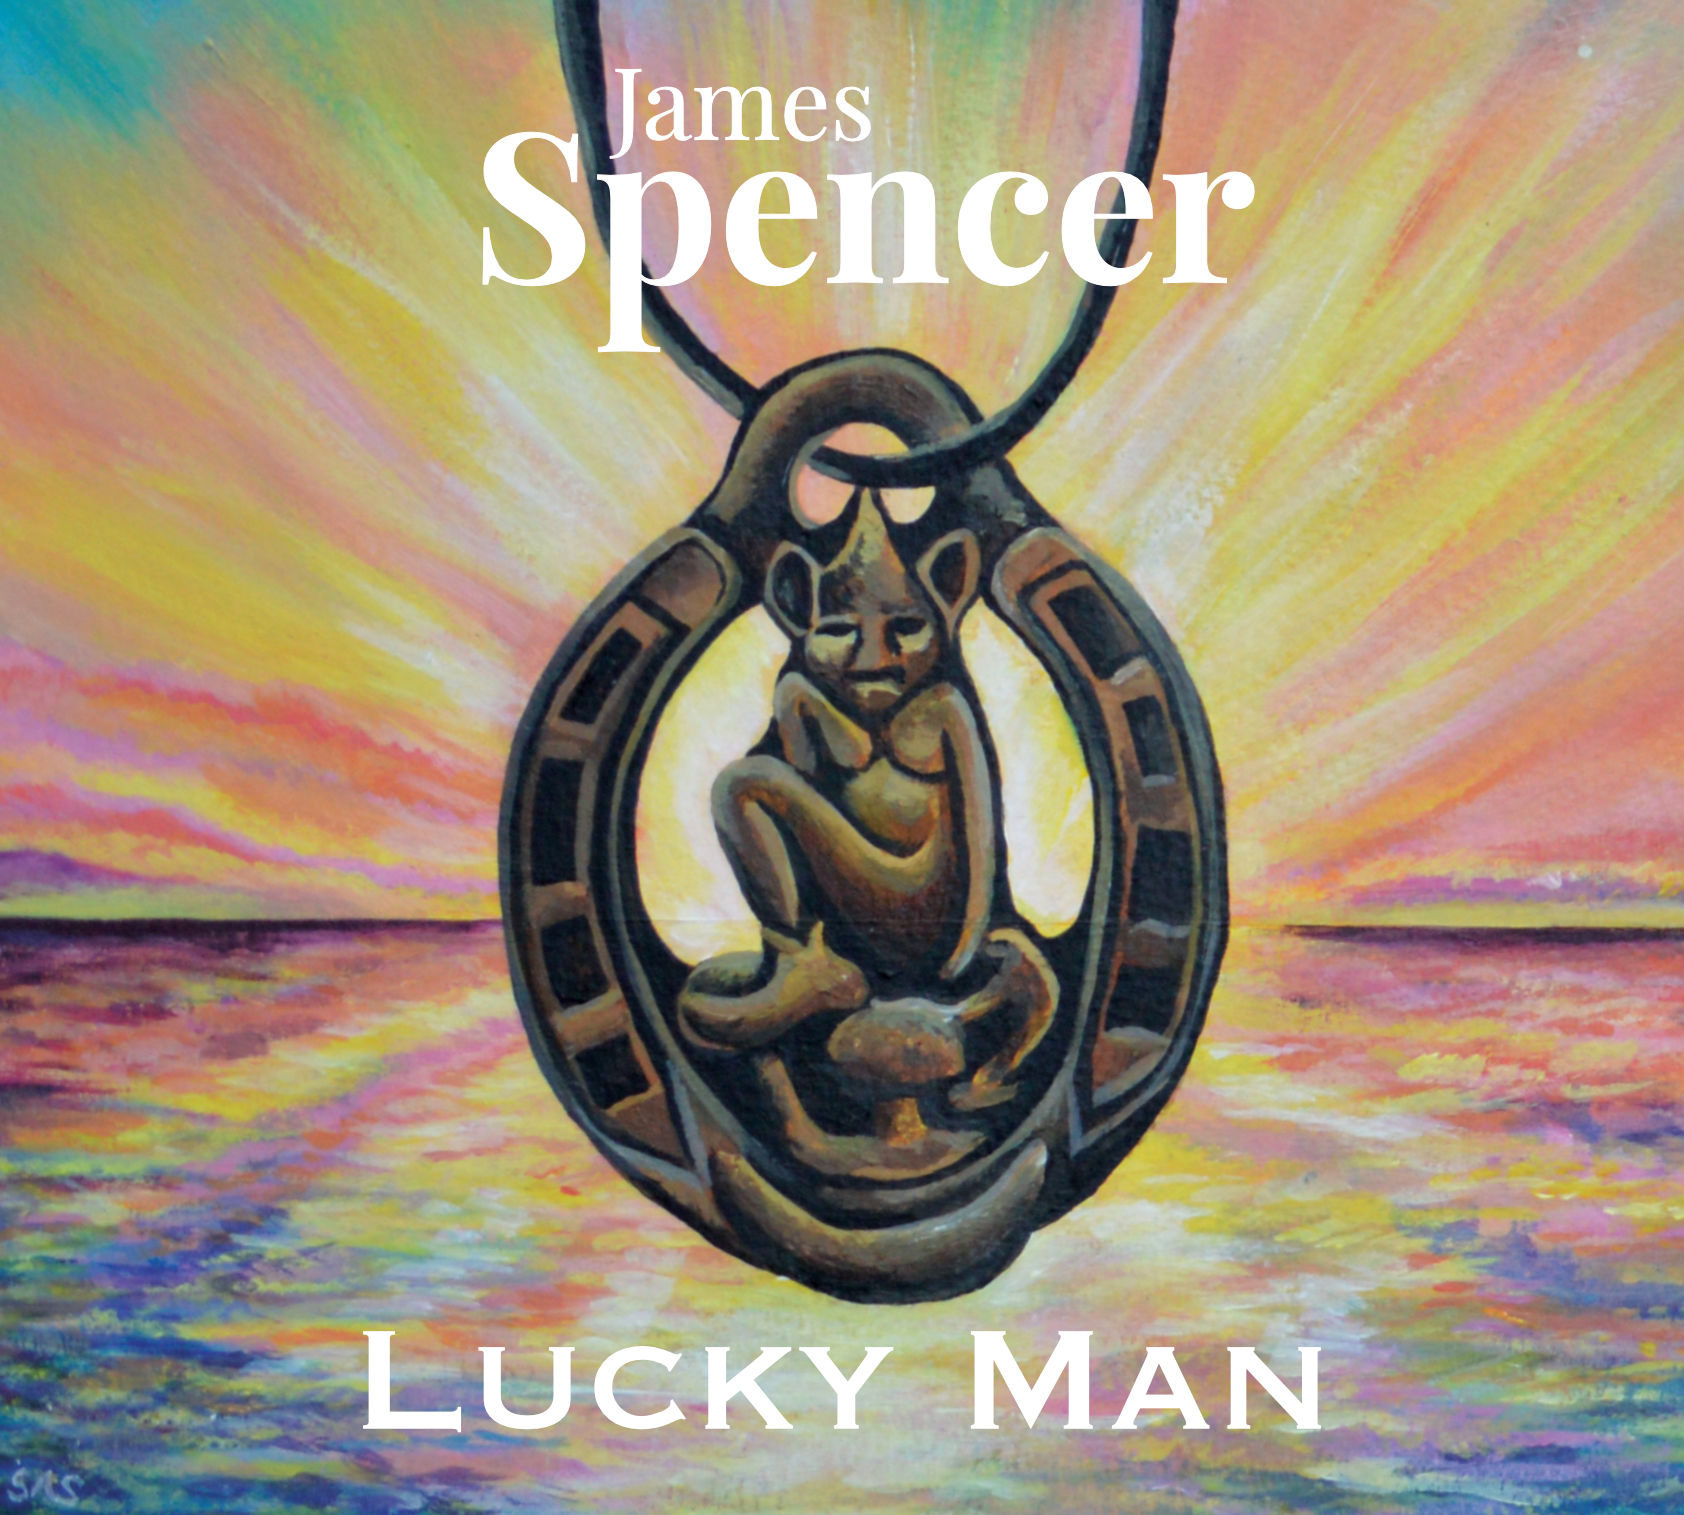 James Spencer – “If”